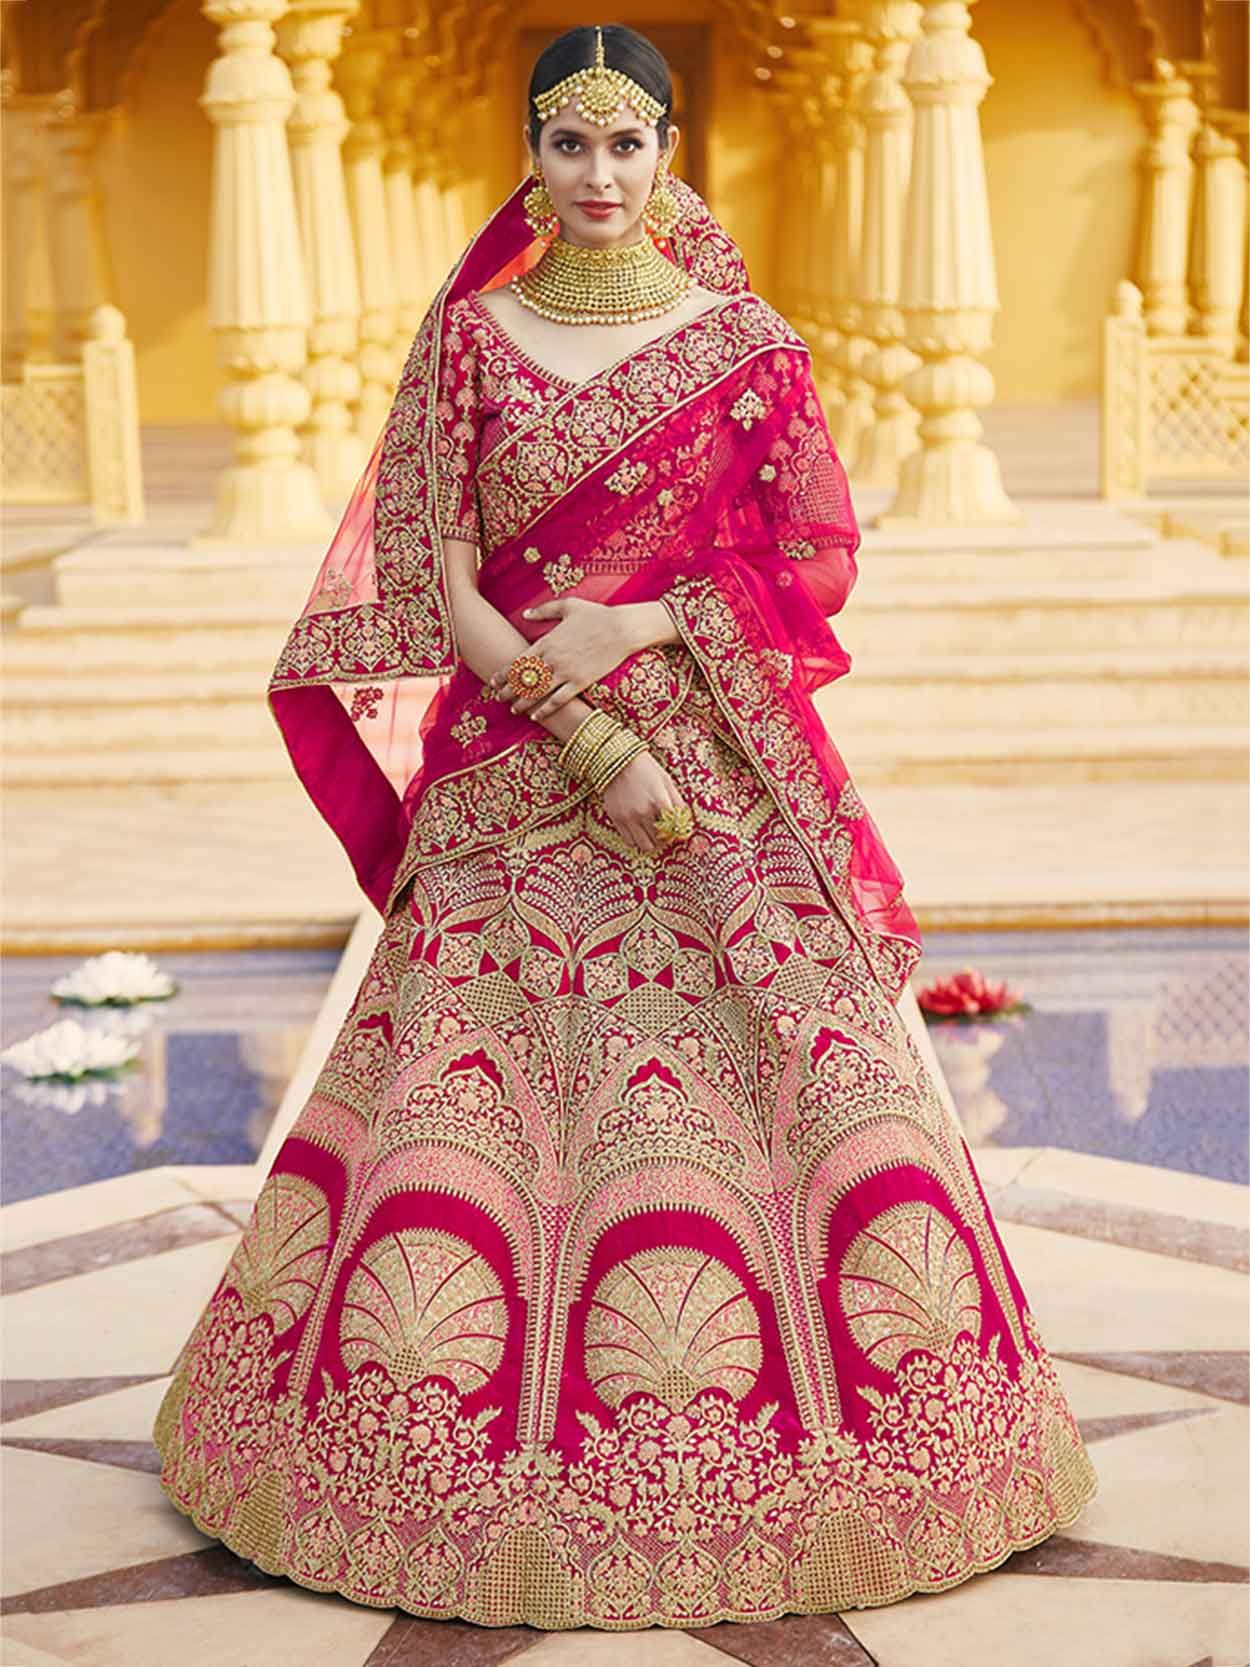 Explore more than 154 designer bridal lehenga